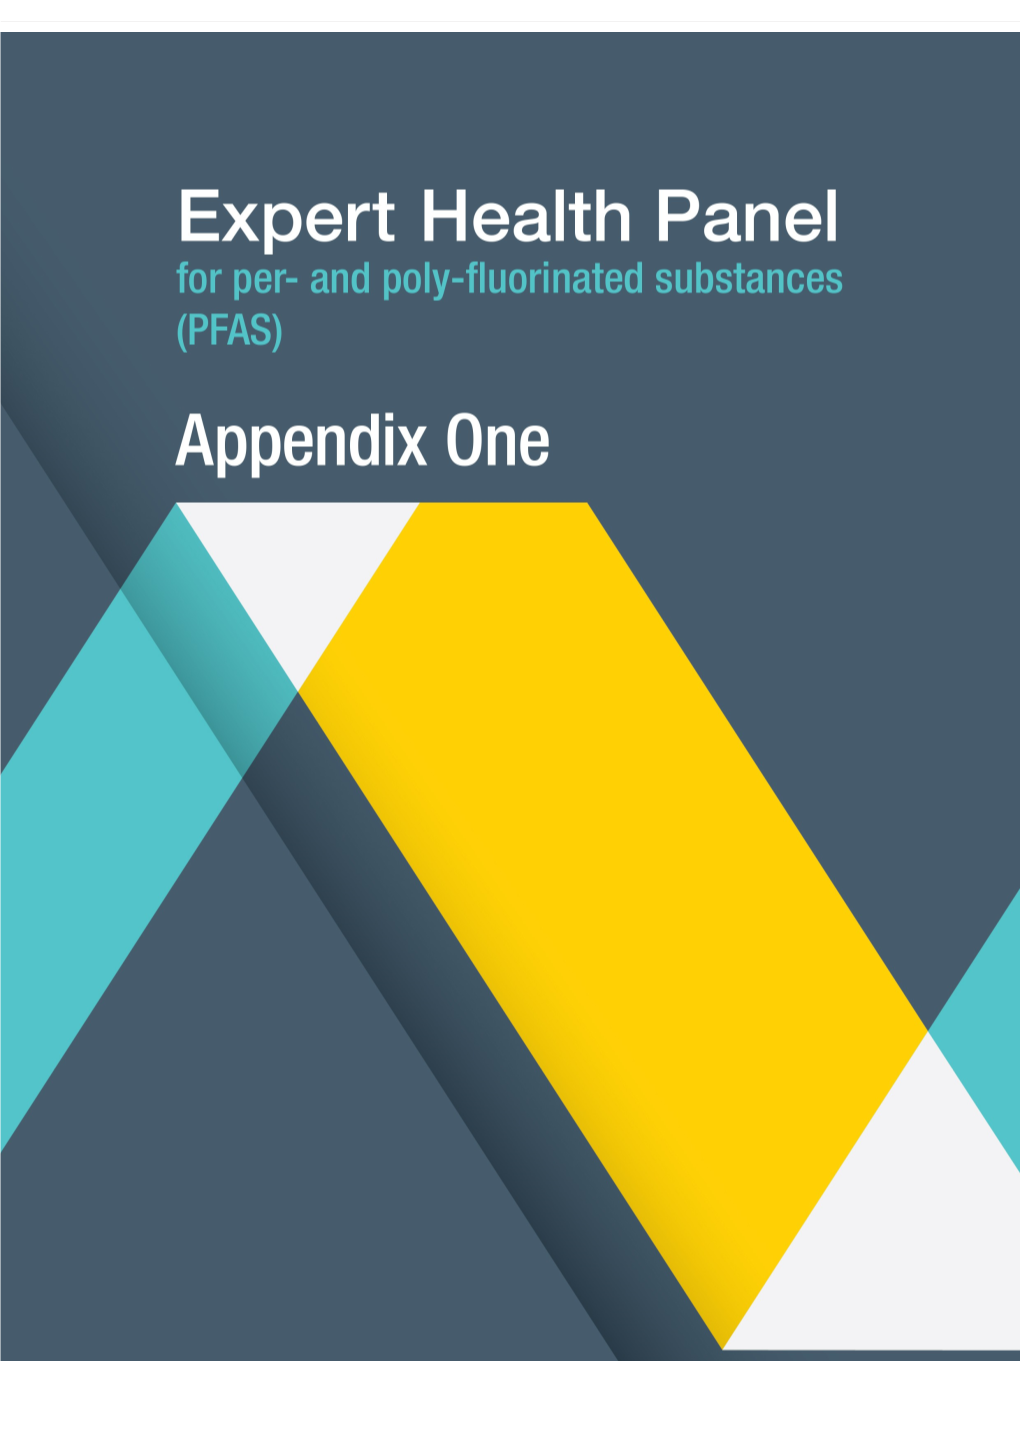 Expert Health Panel for PFAS Public Consultation Report1